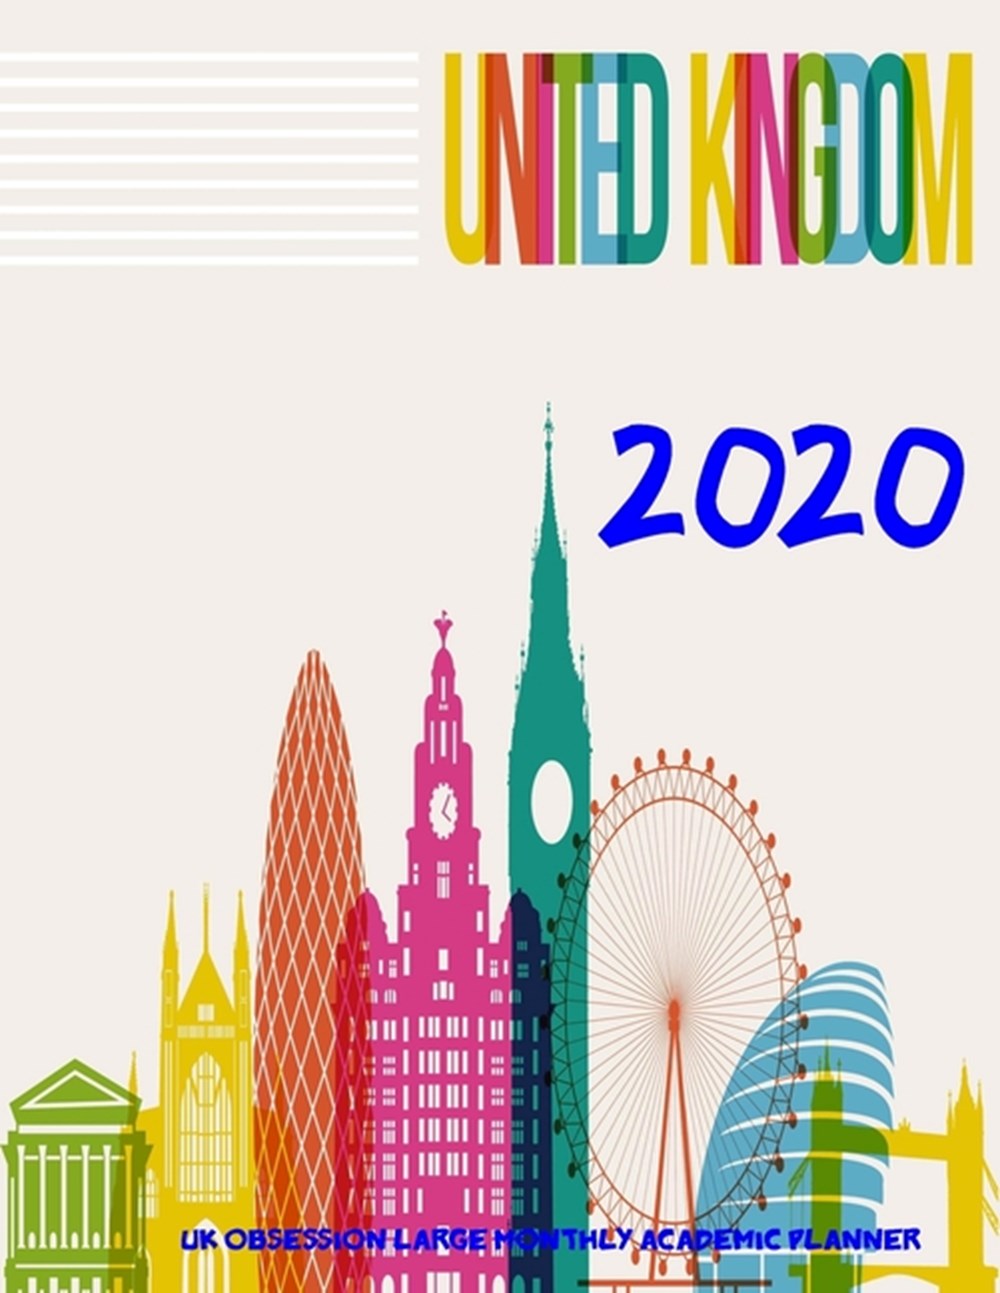 United Kingdom 2020 UK Obsession Large Monthly Academic Planner July 2019 To December 2020 Calendar 